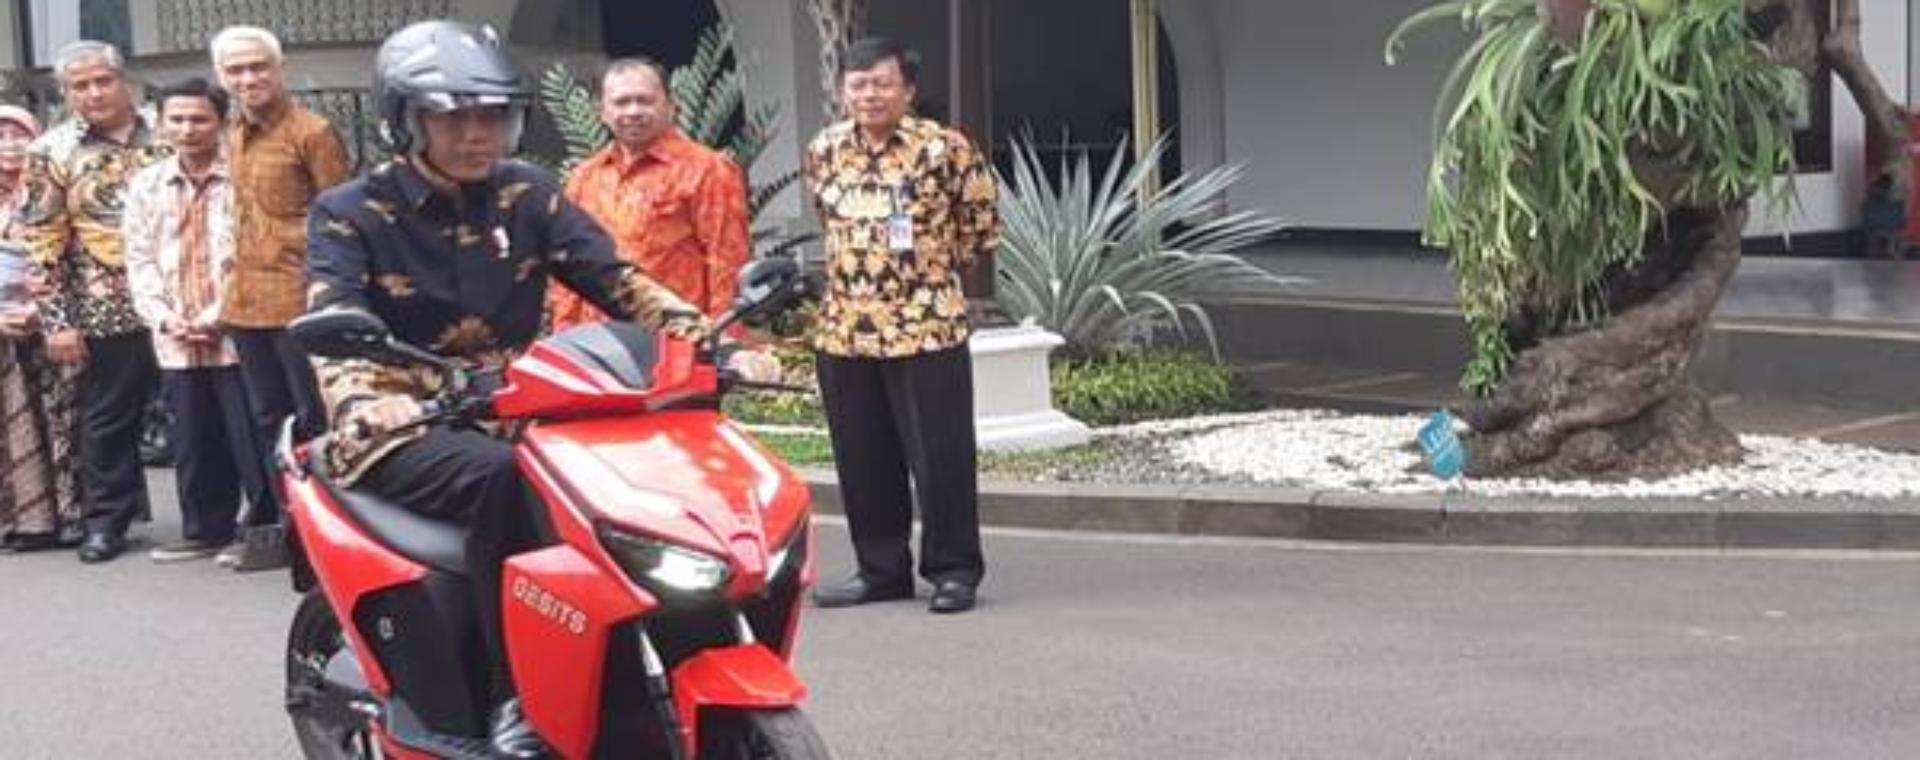 Presiden Joko Widodo mencoba sepeda motor listrik produksi PT Wijaya Manufakturing, Rabu (7/11)./JIBI - BISNIS/Yodie Herdiyan